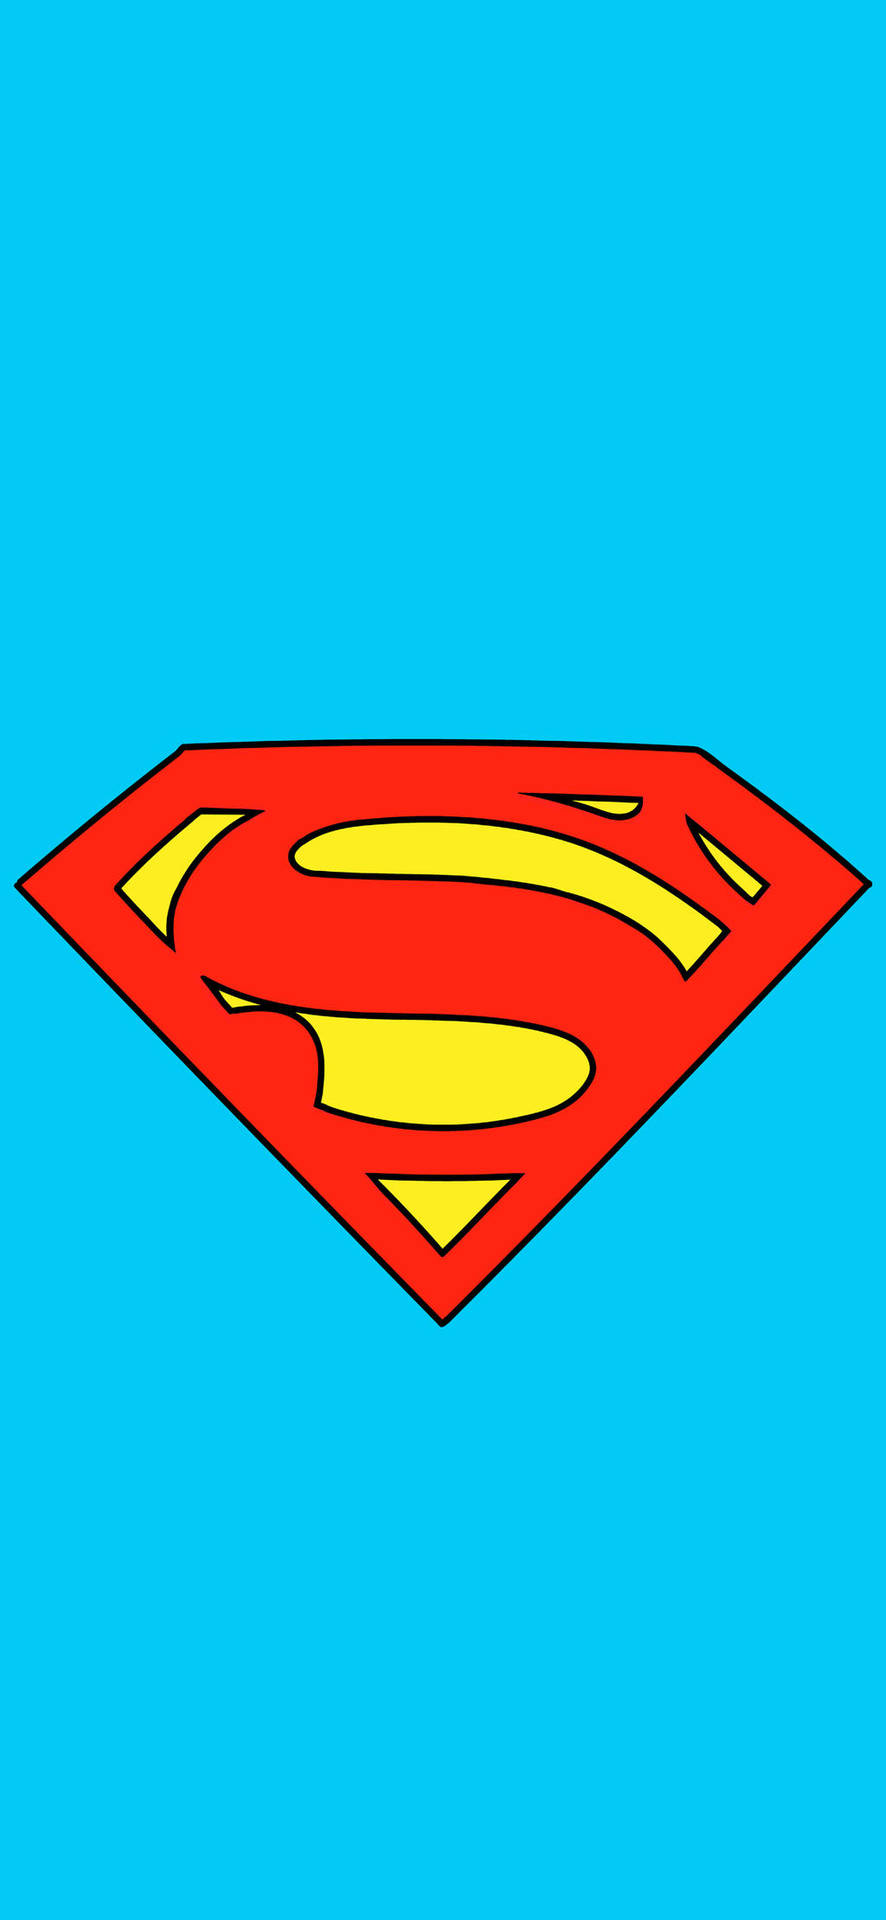 Simple Line Art Superman Symbol Iphone Background